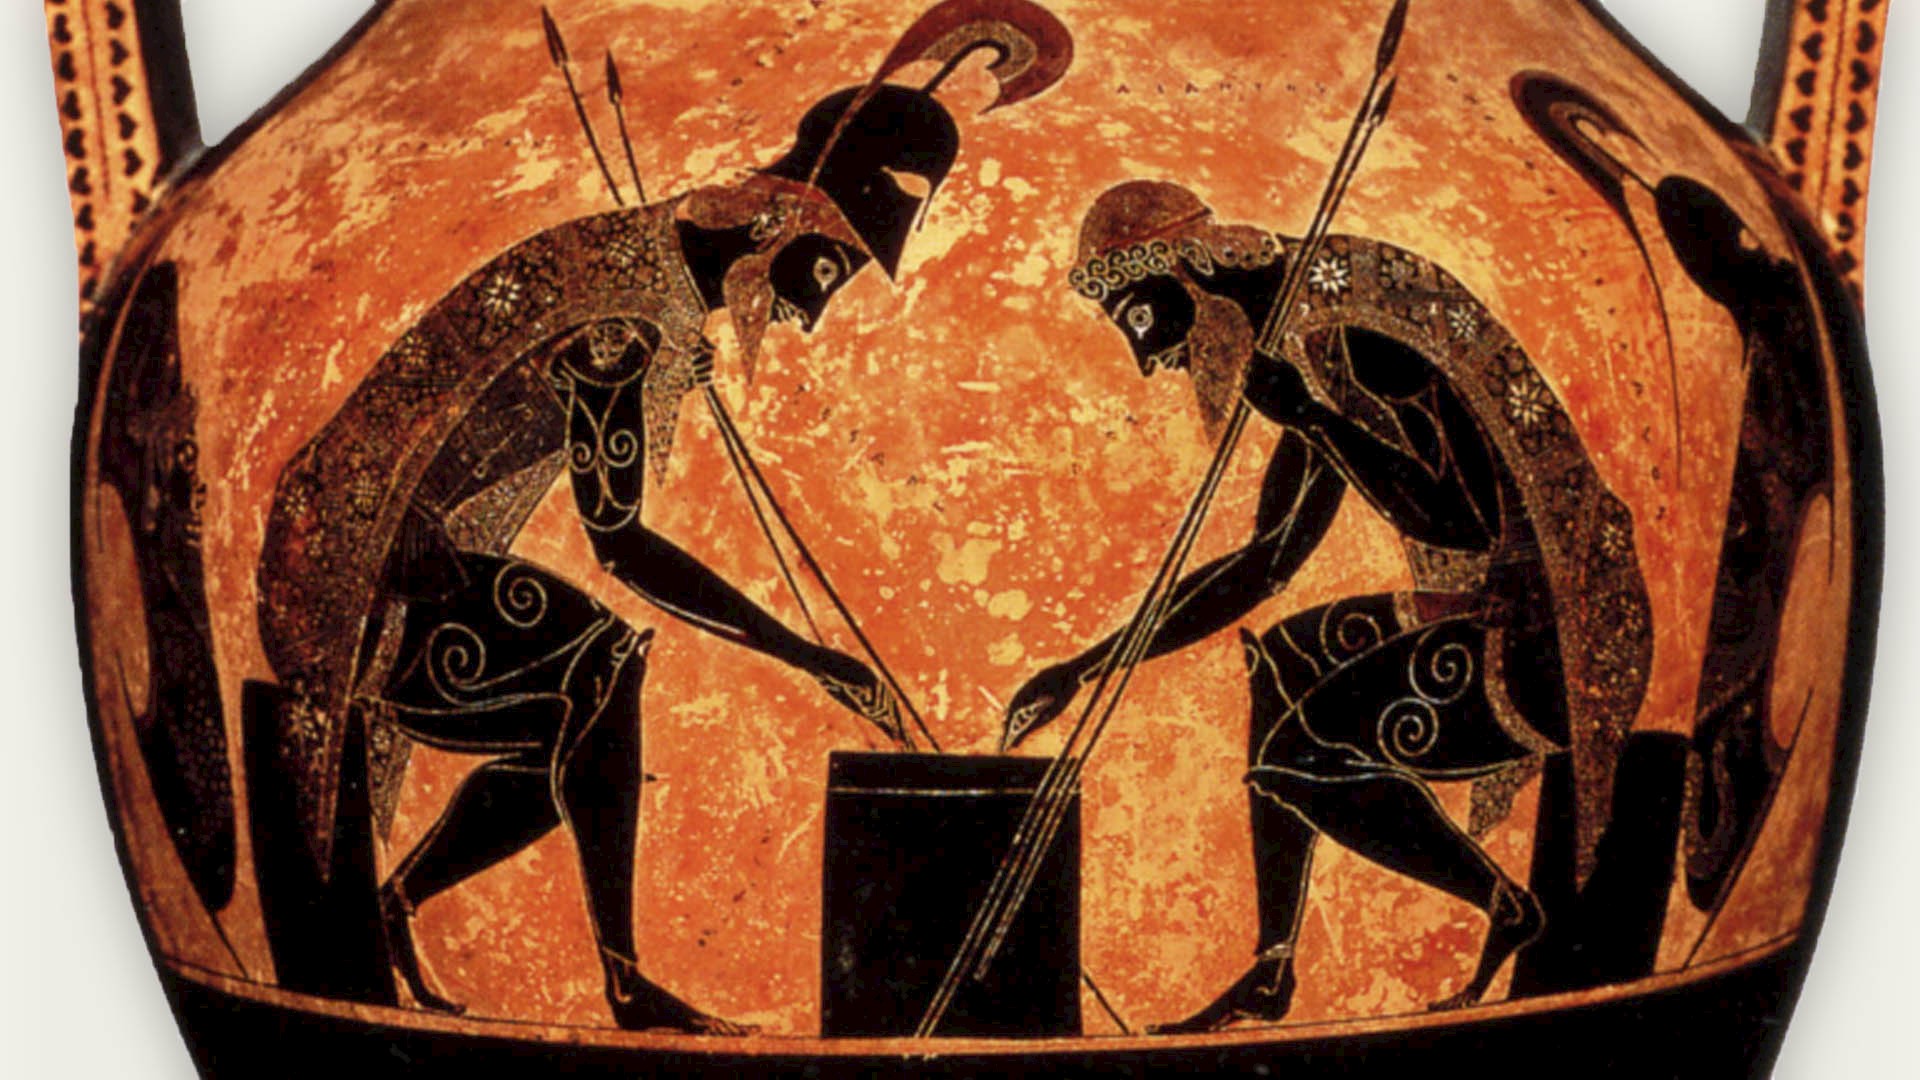 Ancient Greek heroes at play